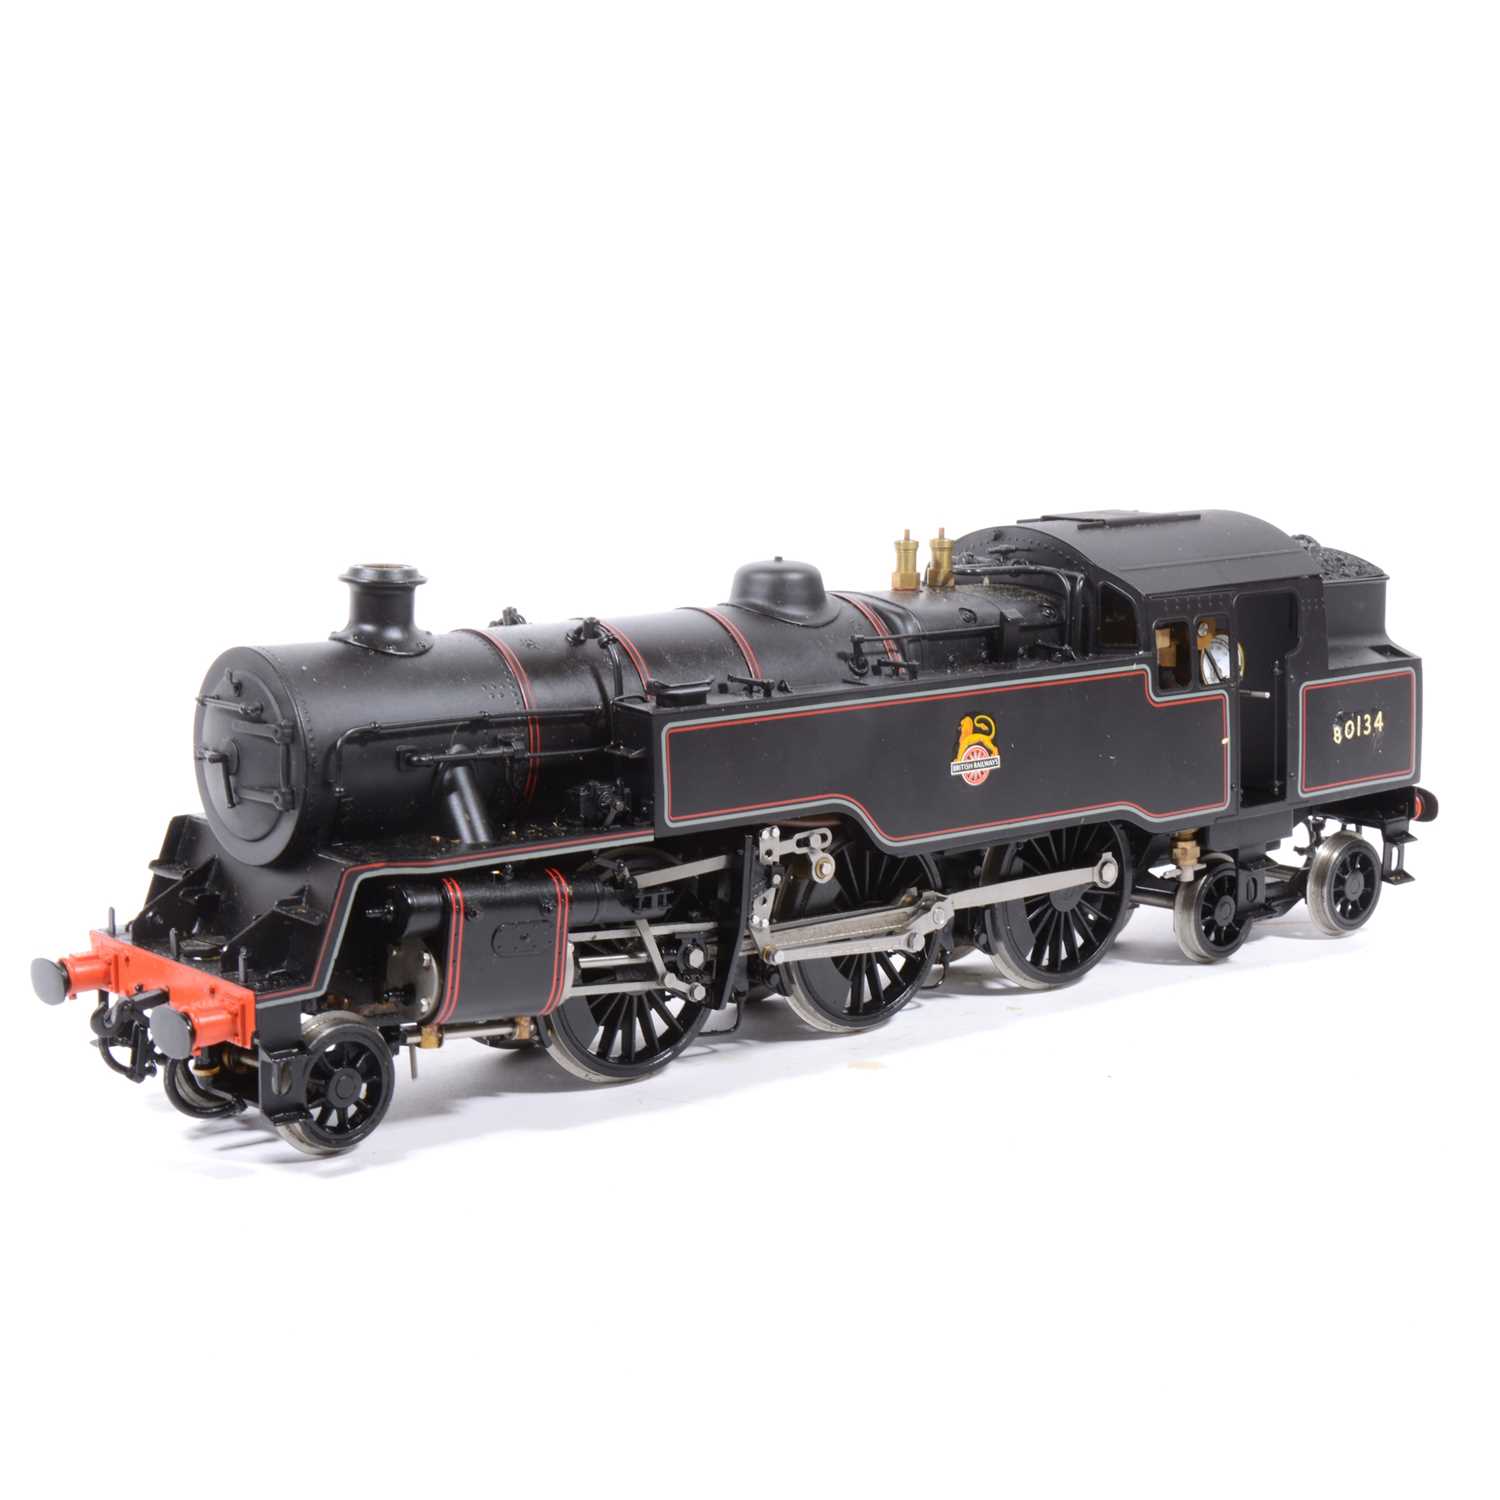 34 - Live steam model, gauge 1 / G scale, 45mm locomotive, 4MT 2-6-4T BR no.80134.